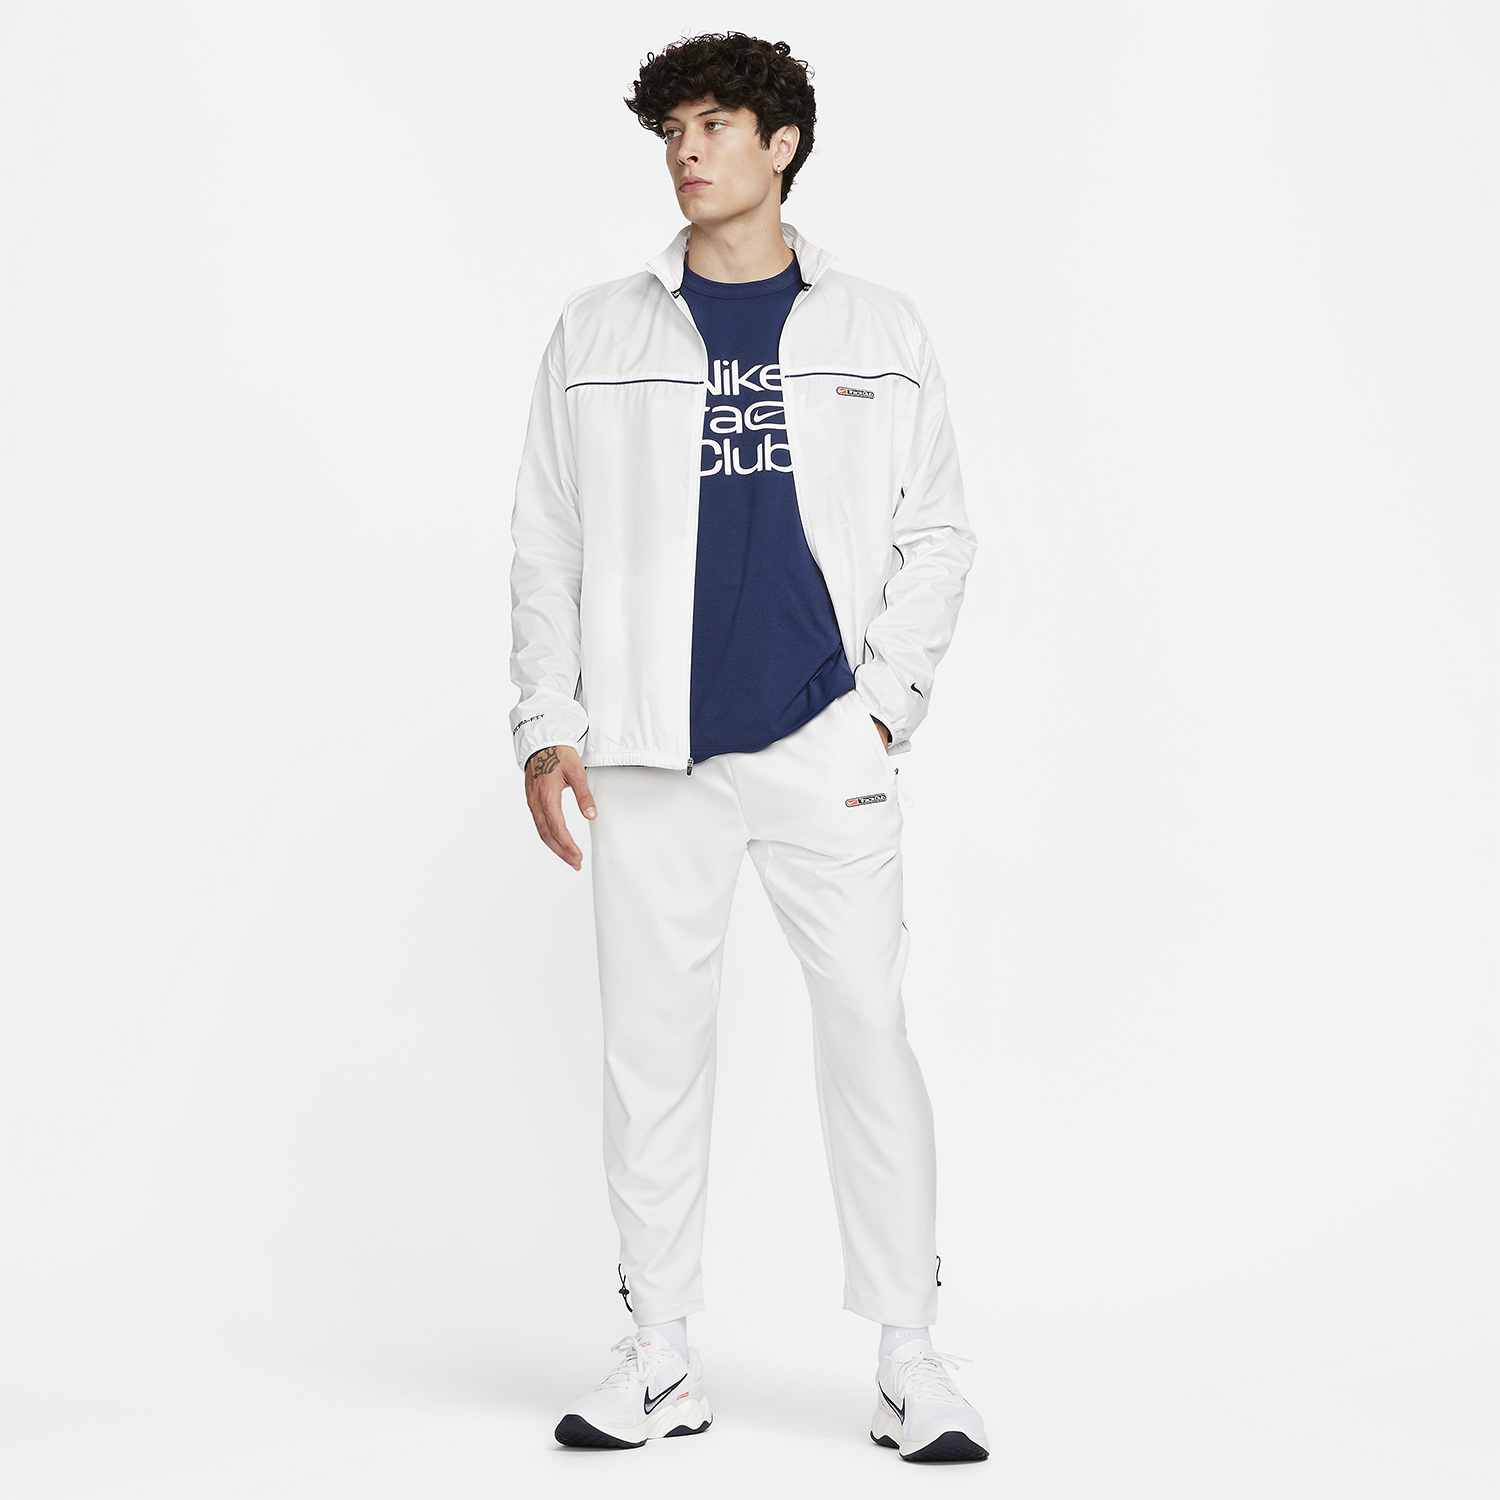 Nike Hyverse Track Club Shirt - Midnight Navy/Summit White